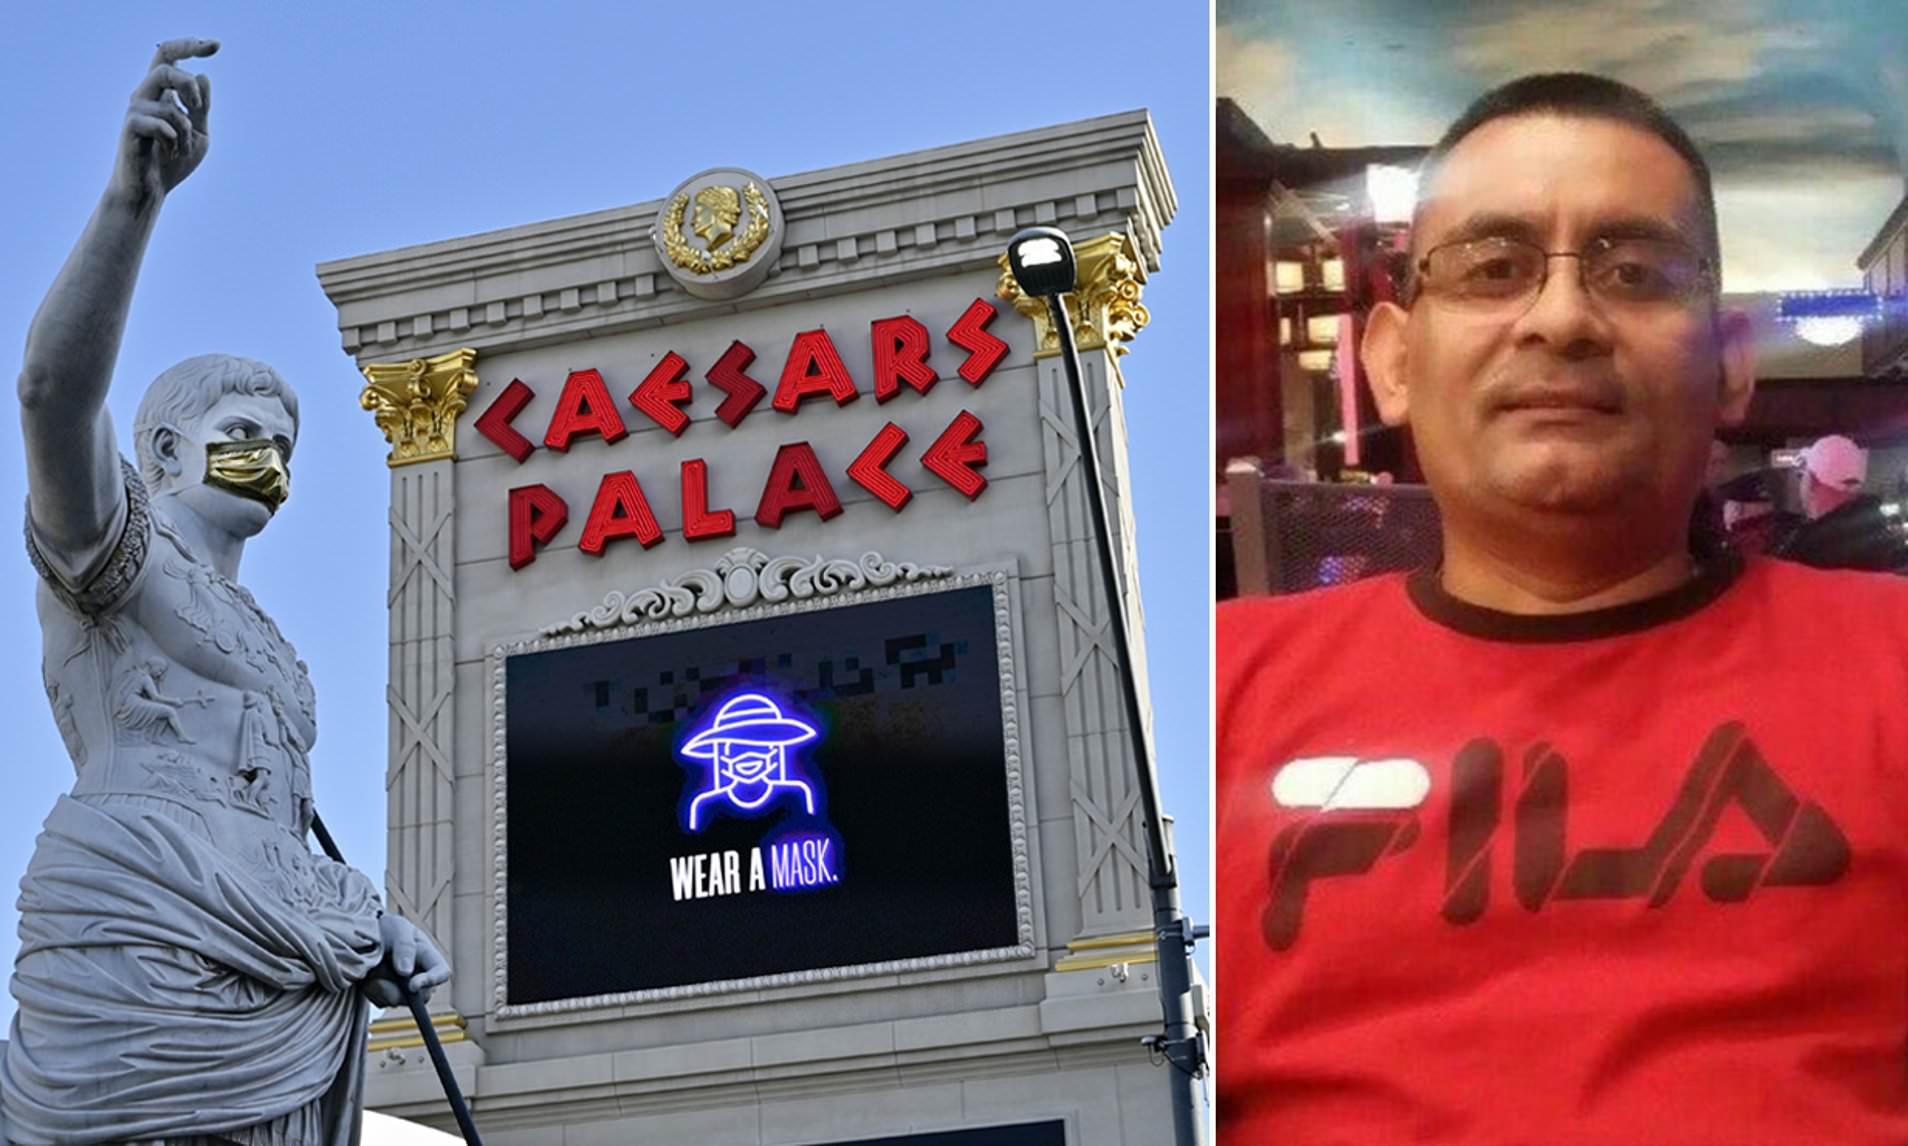 Caesars Palace employee recalled